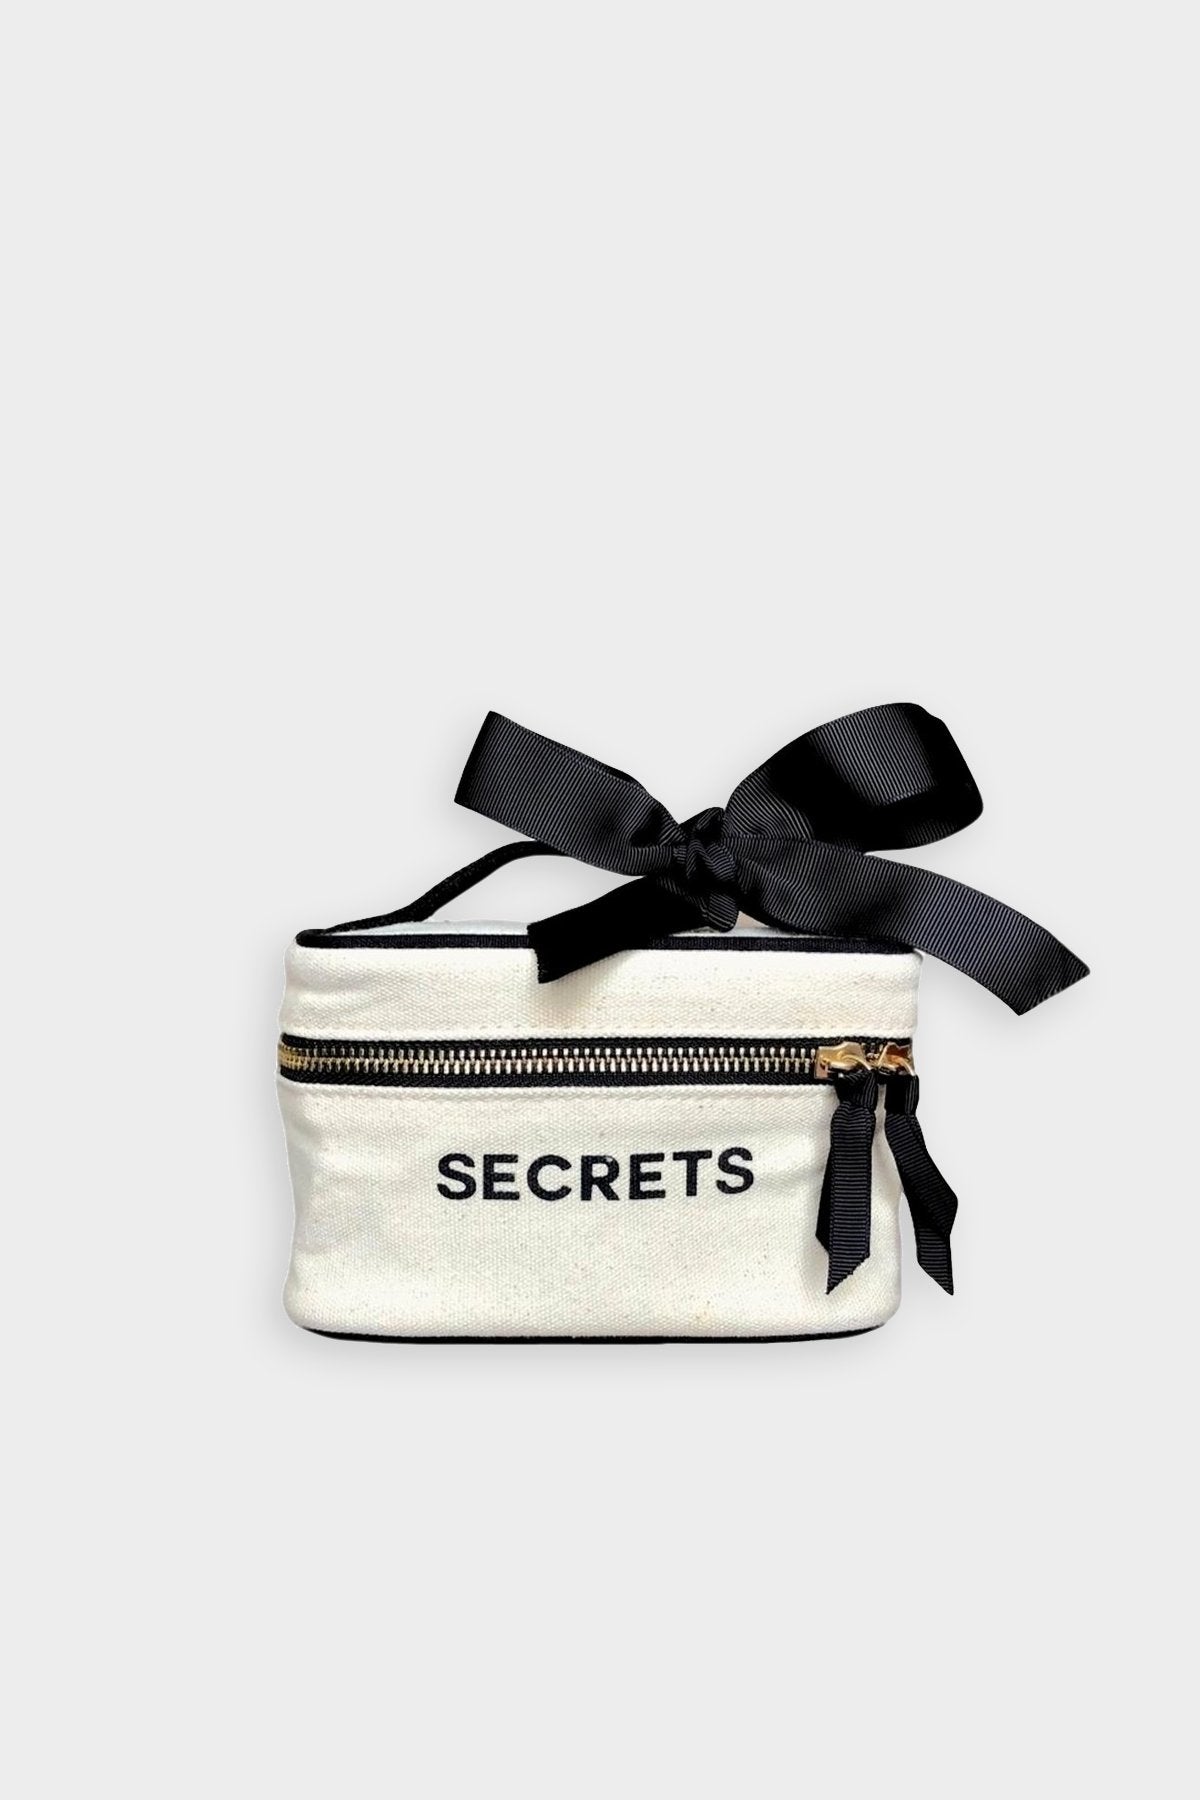 Beauty Box Mini Secrets in White - shop-olivia.com